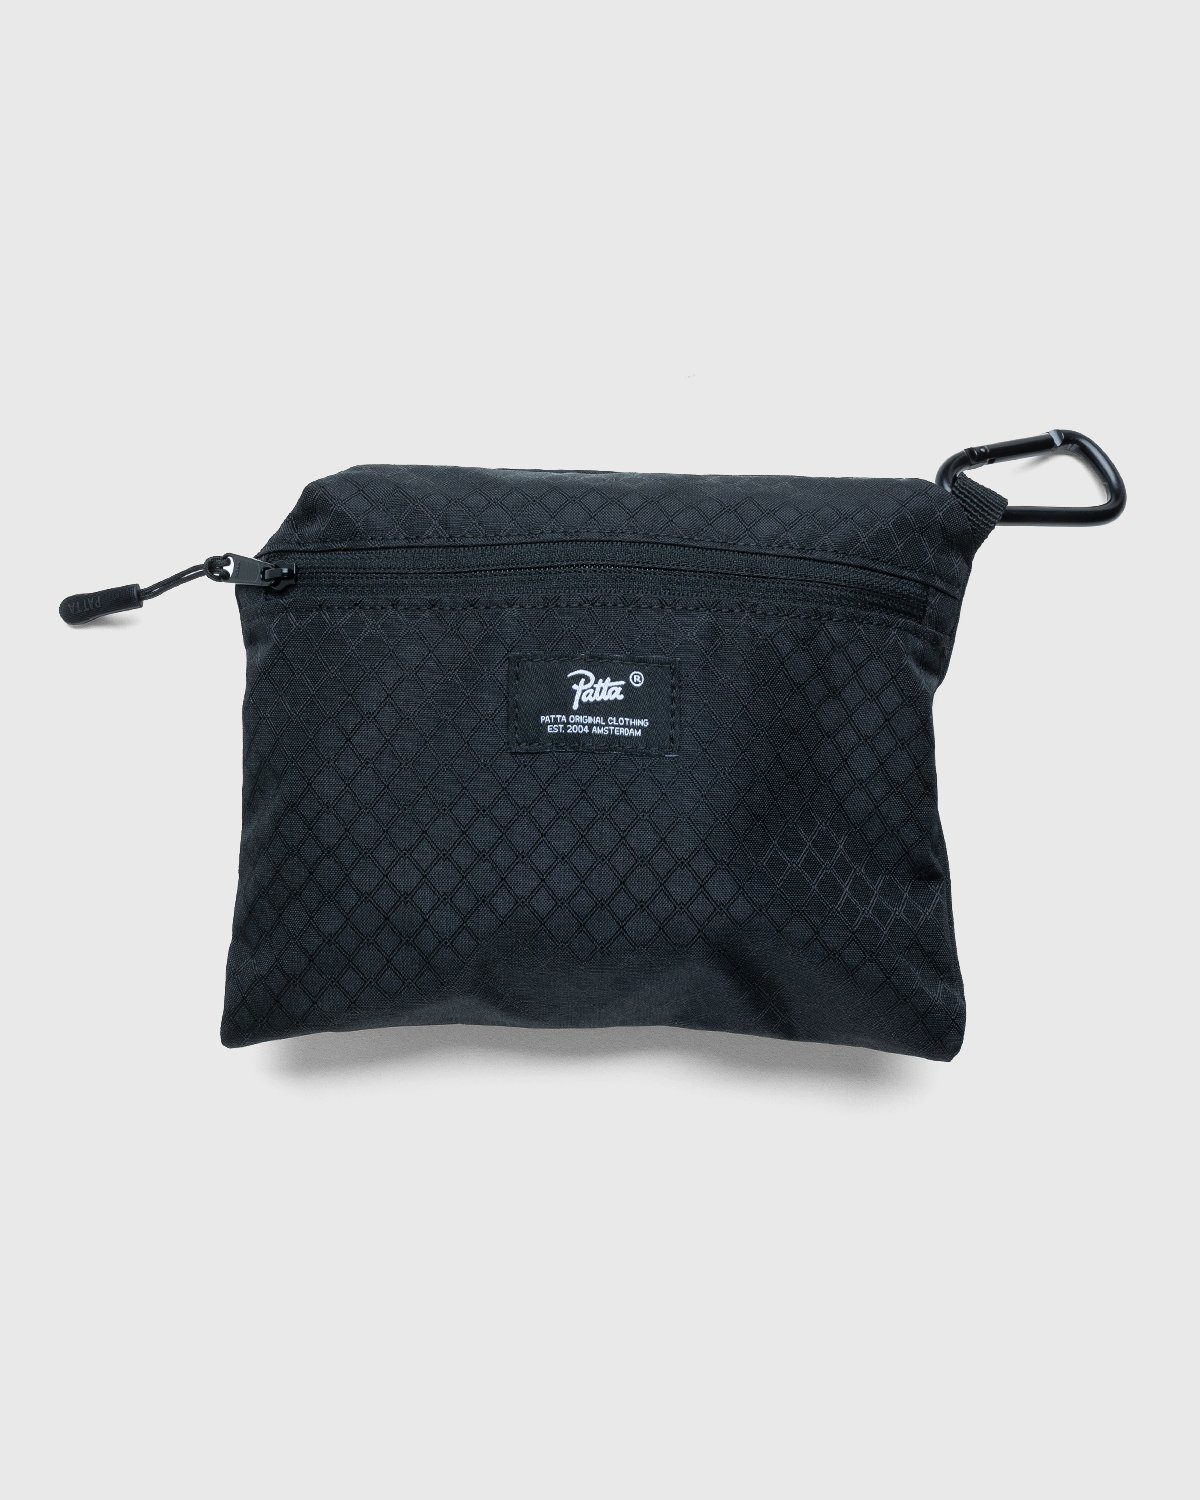 Patta - Diamond Packable Tote Bag Black - Accessories - Black - Image 3